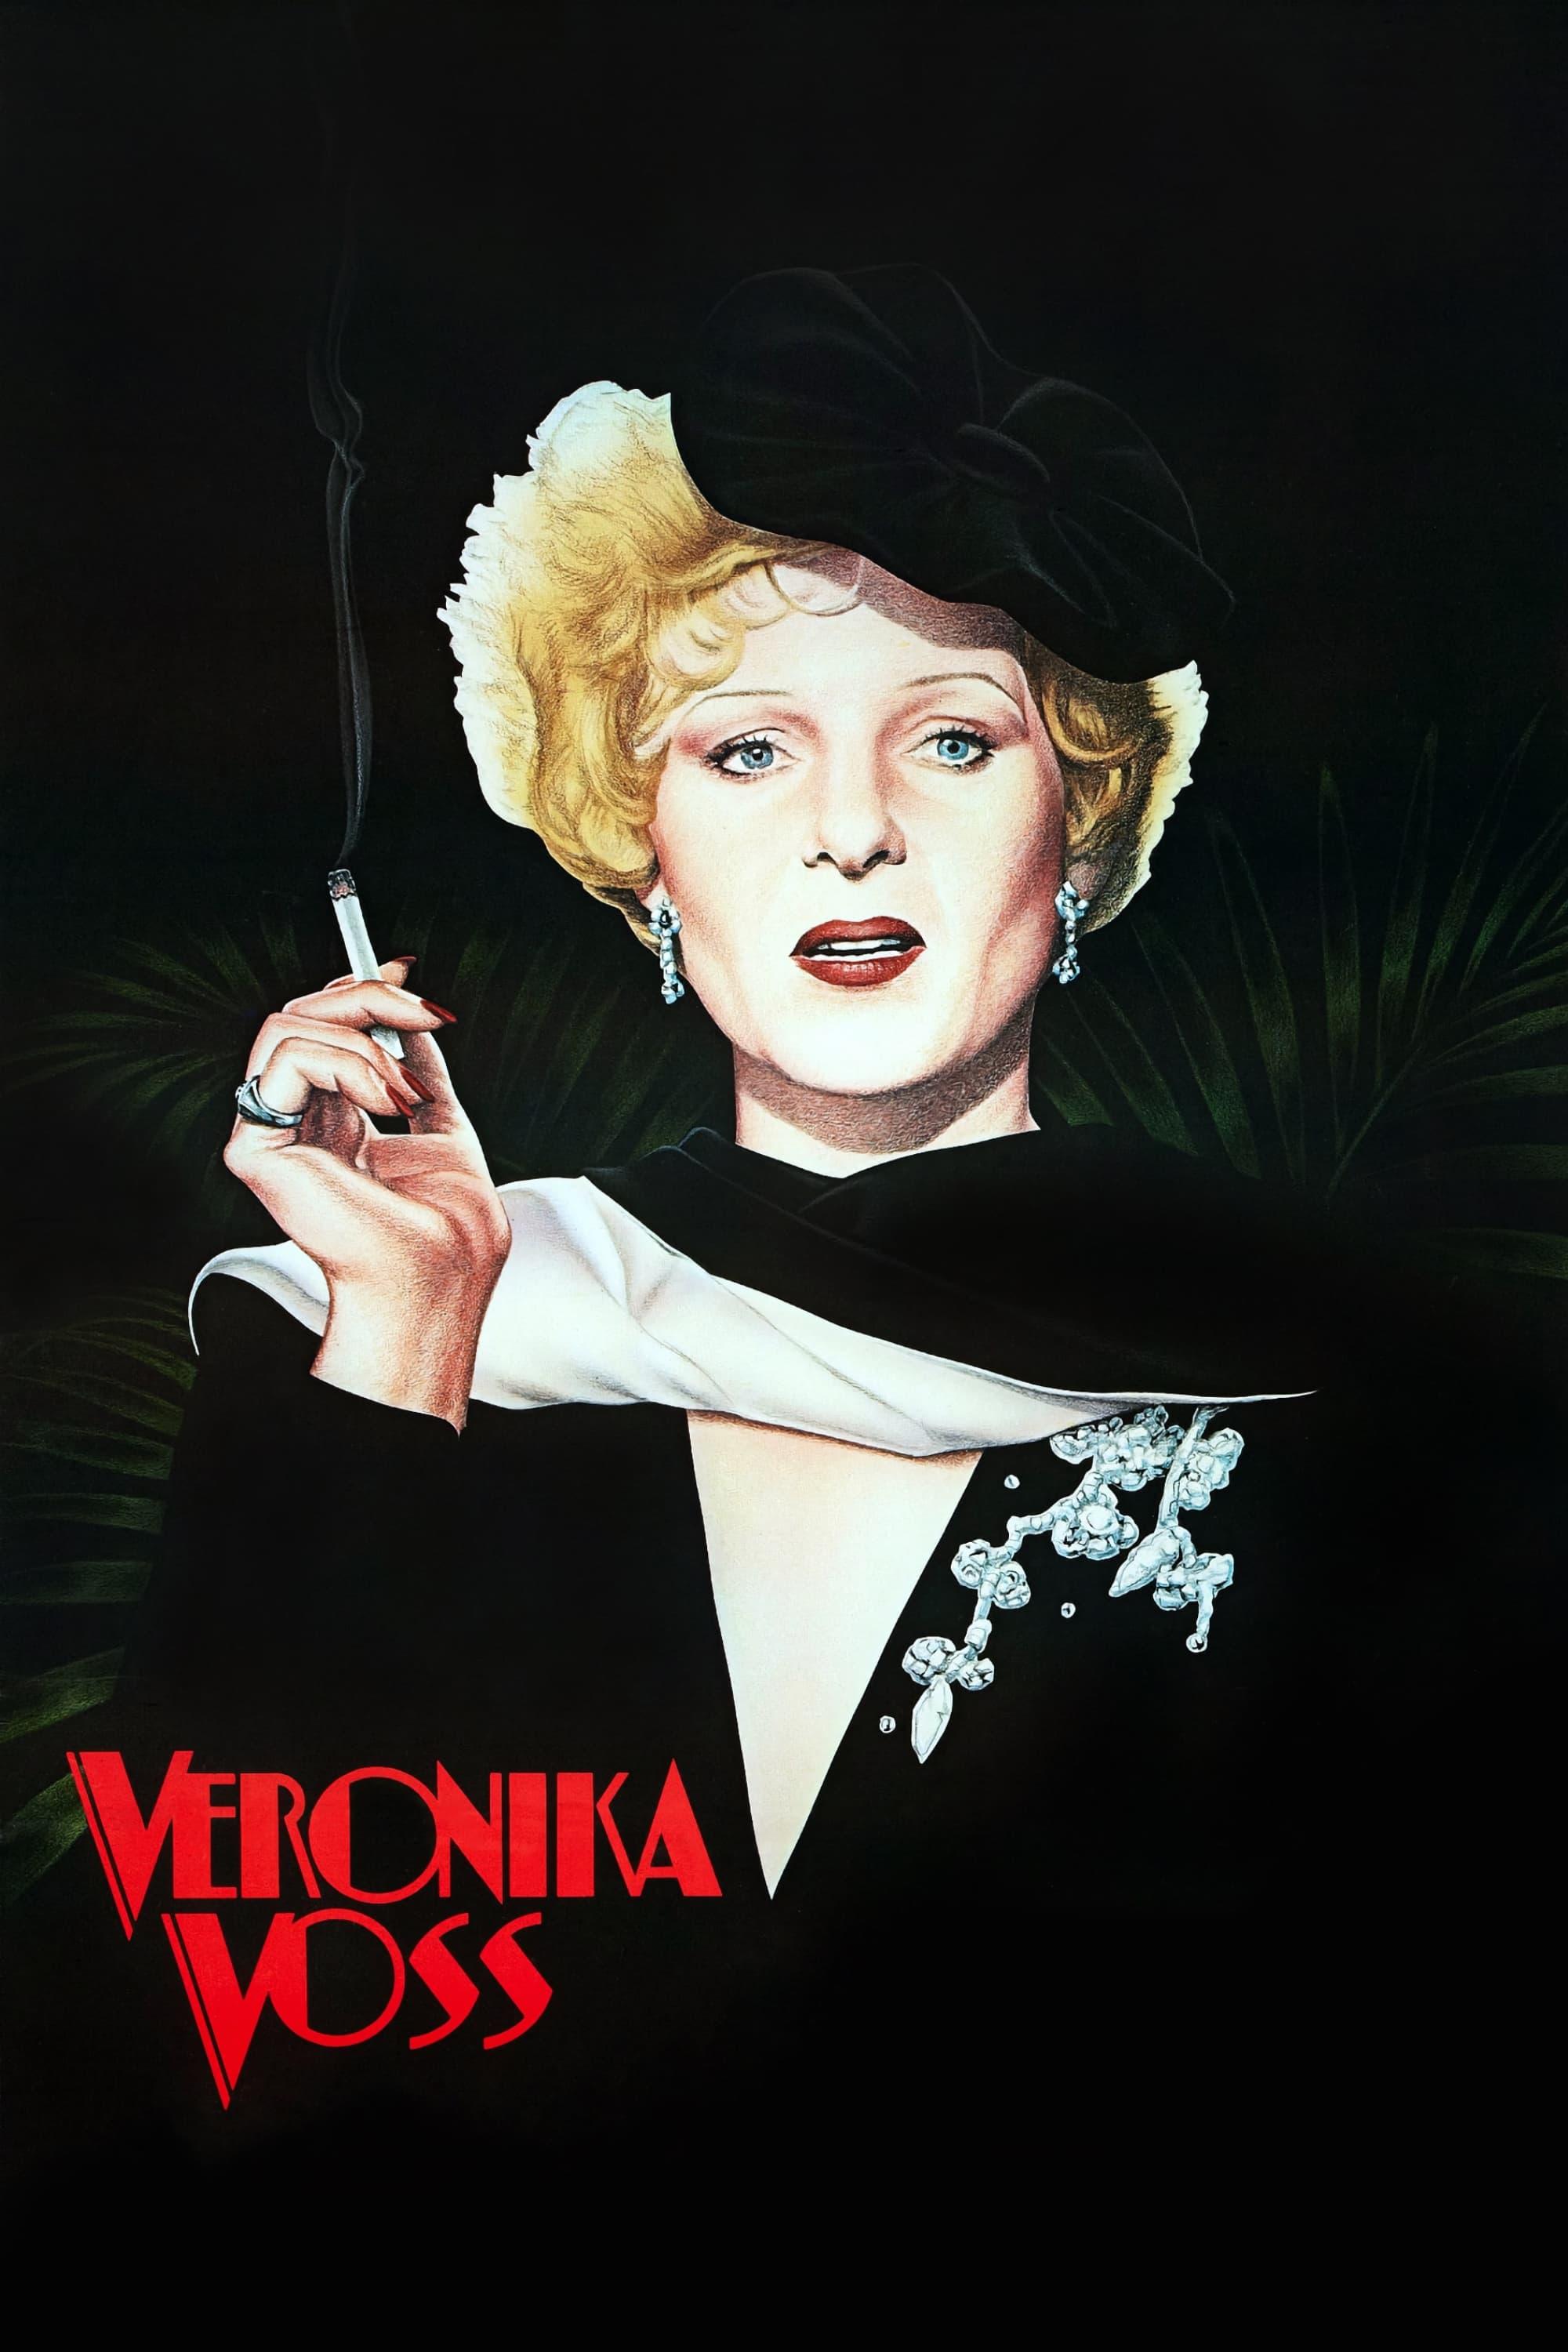 Veronika Voss poster